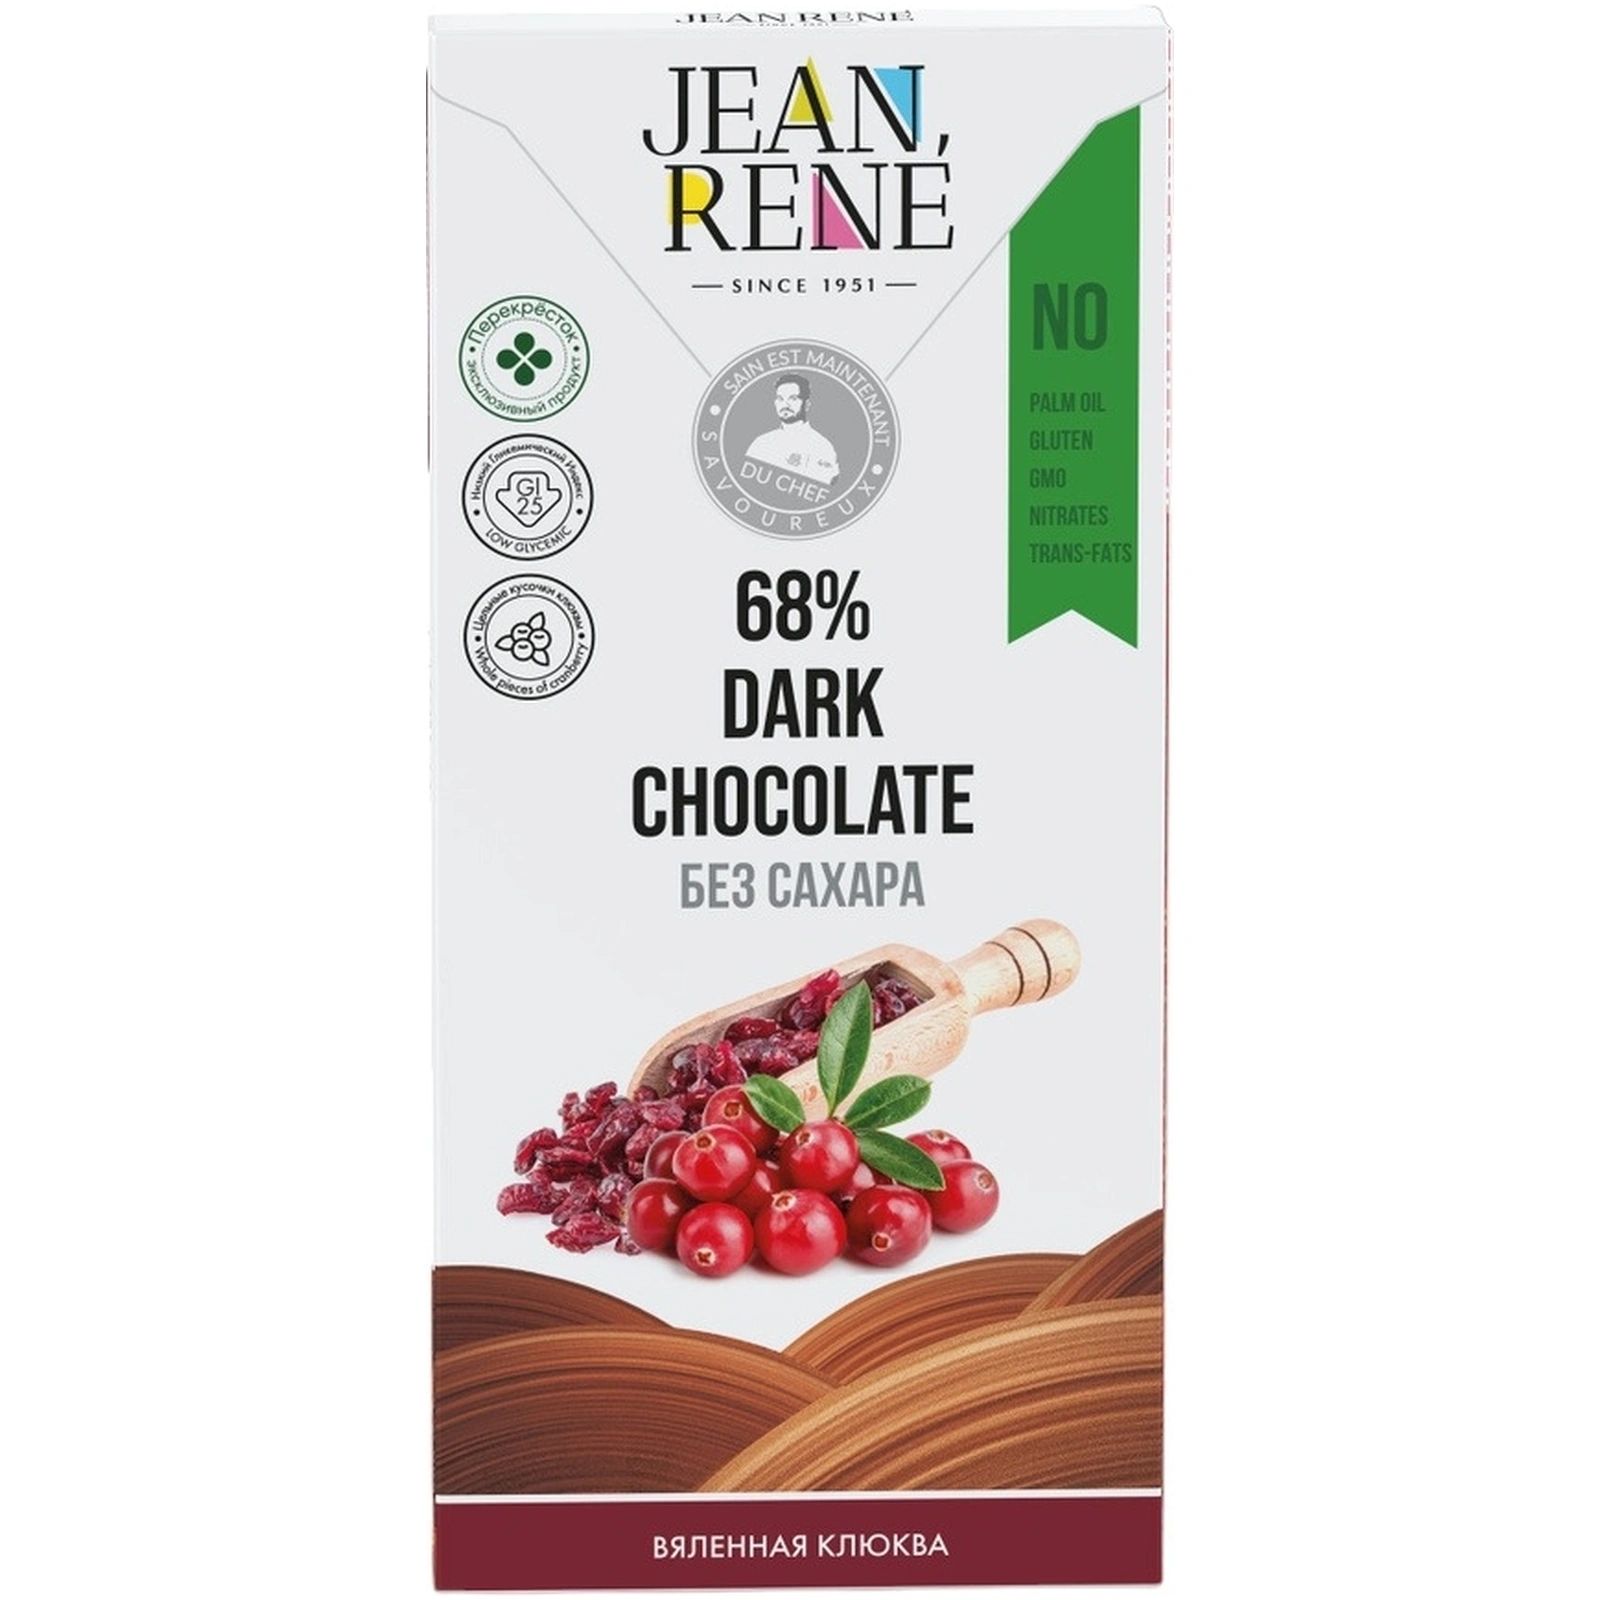 Шоколад Jean Rene темный авторский с вяленой клюквой без сахара 80 г